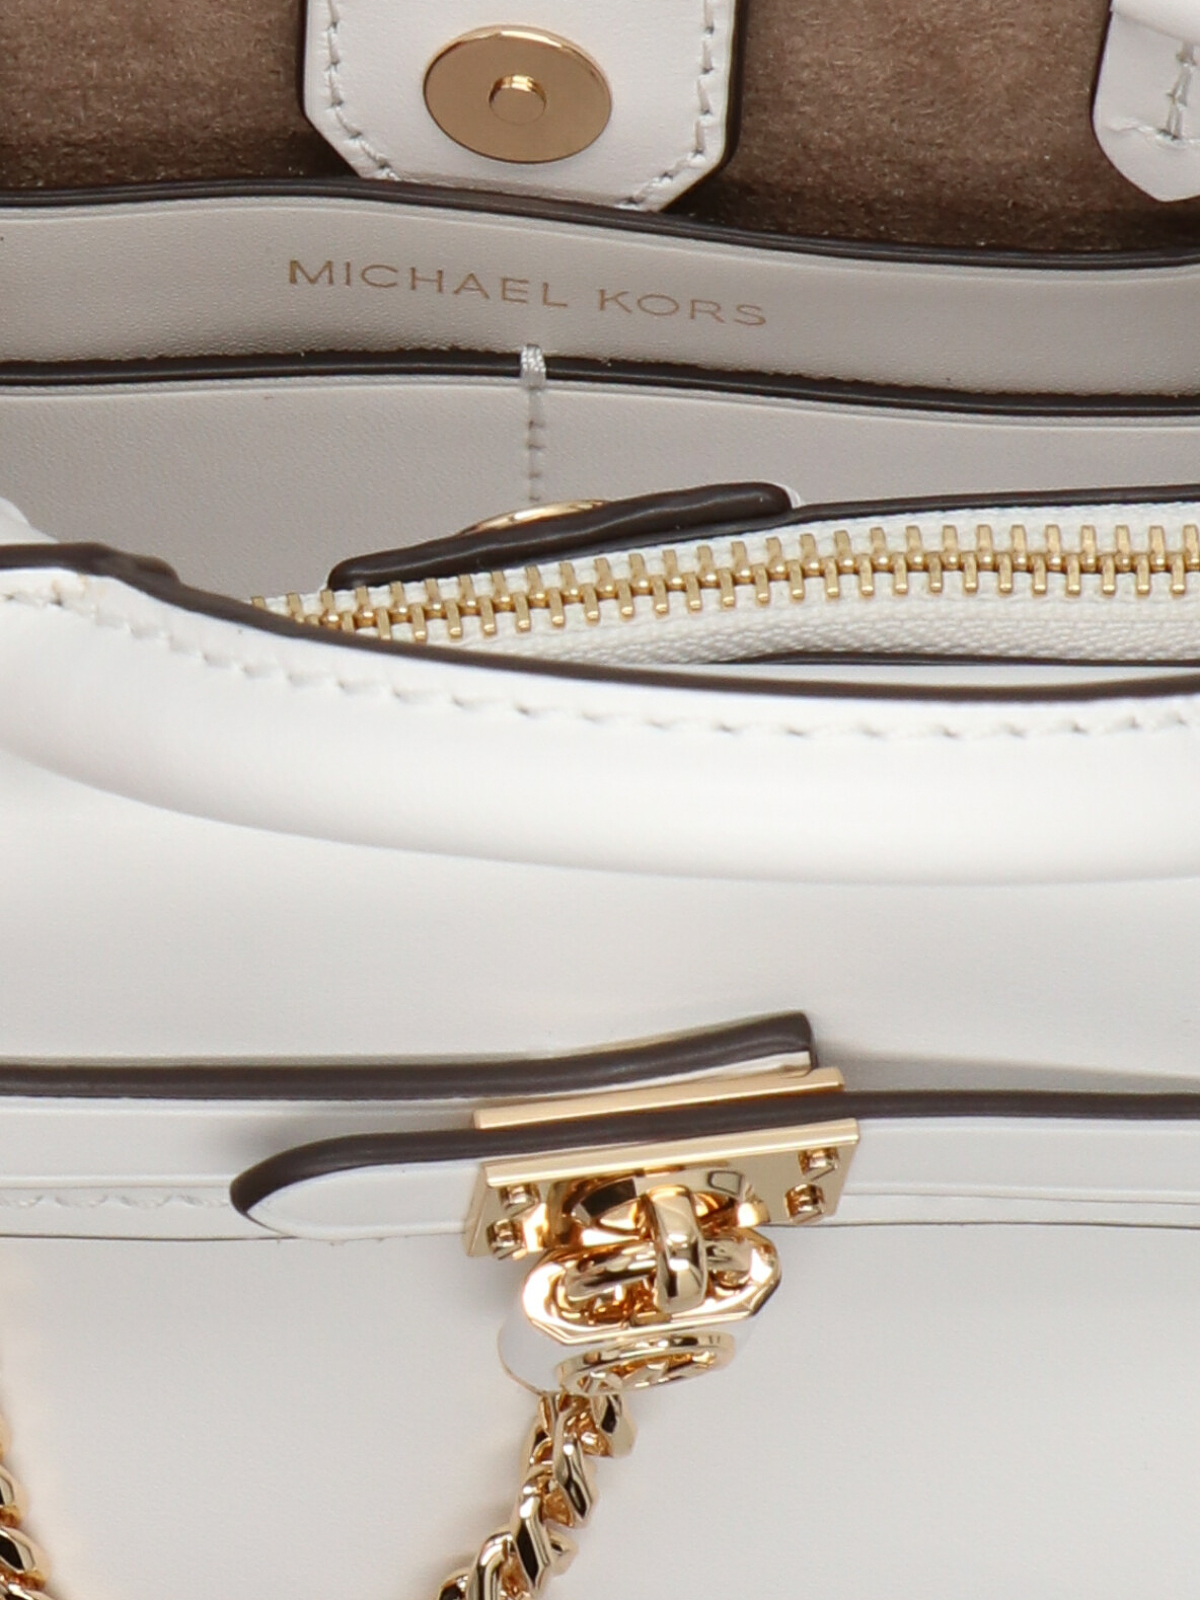 Totes bags Michael Kors - hamilton legacy small handbag - 32S3G9HC0L085